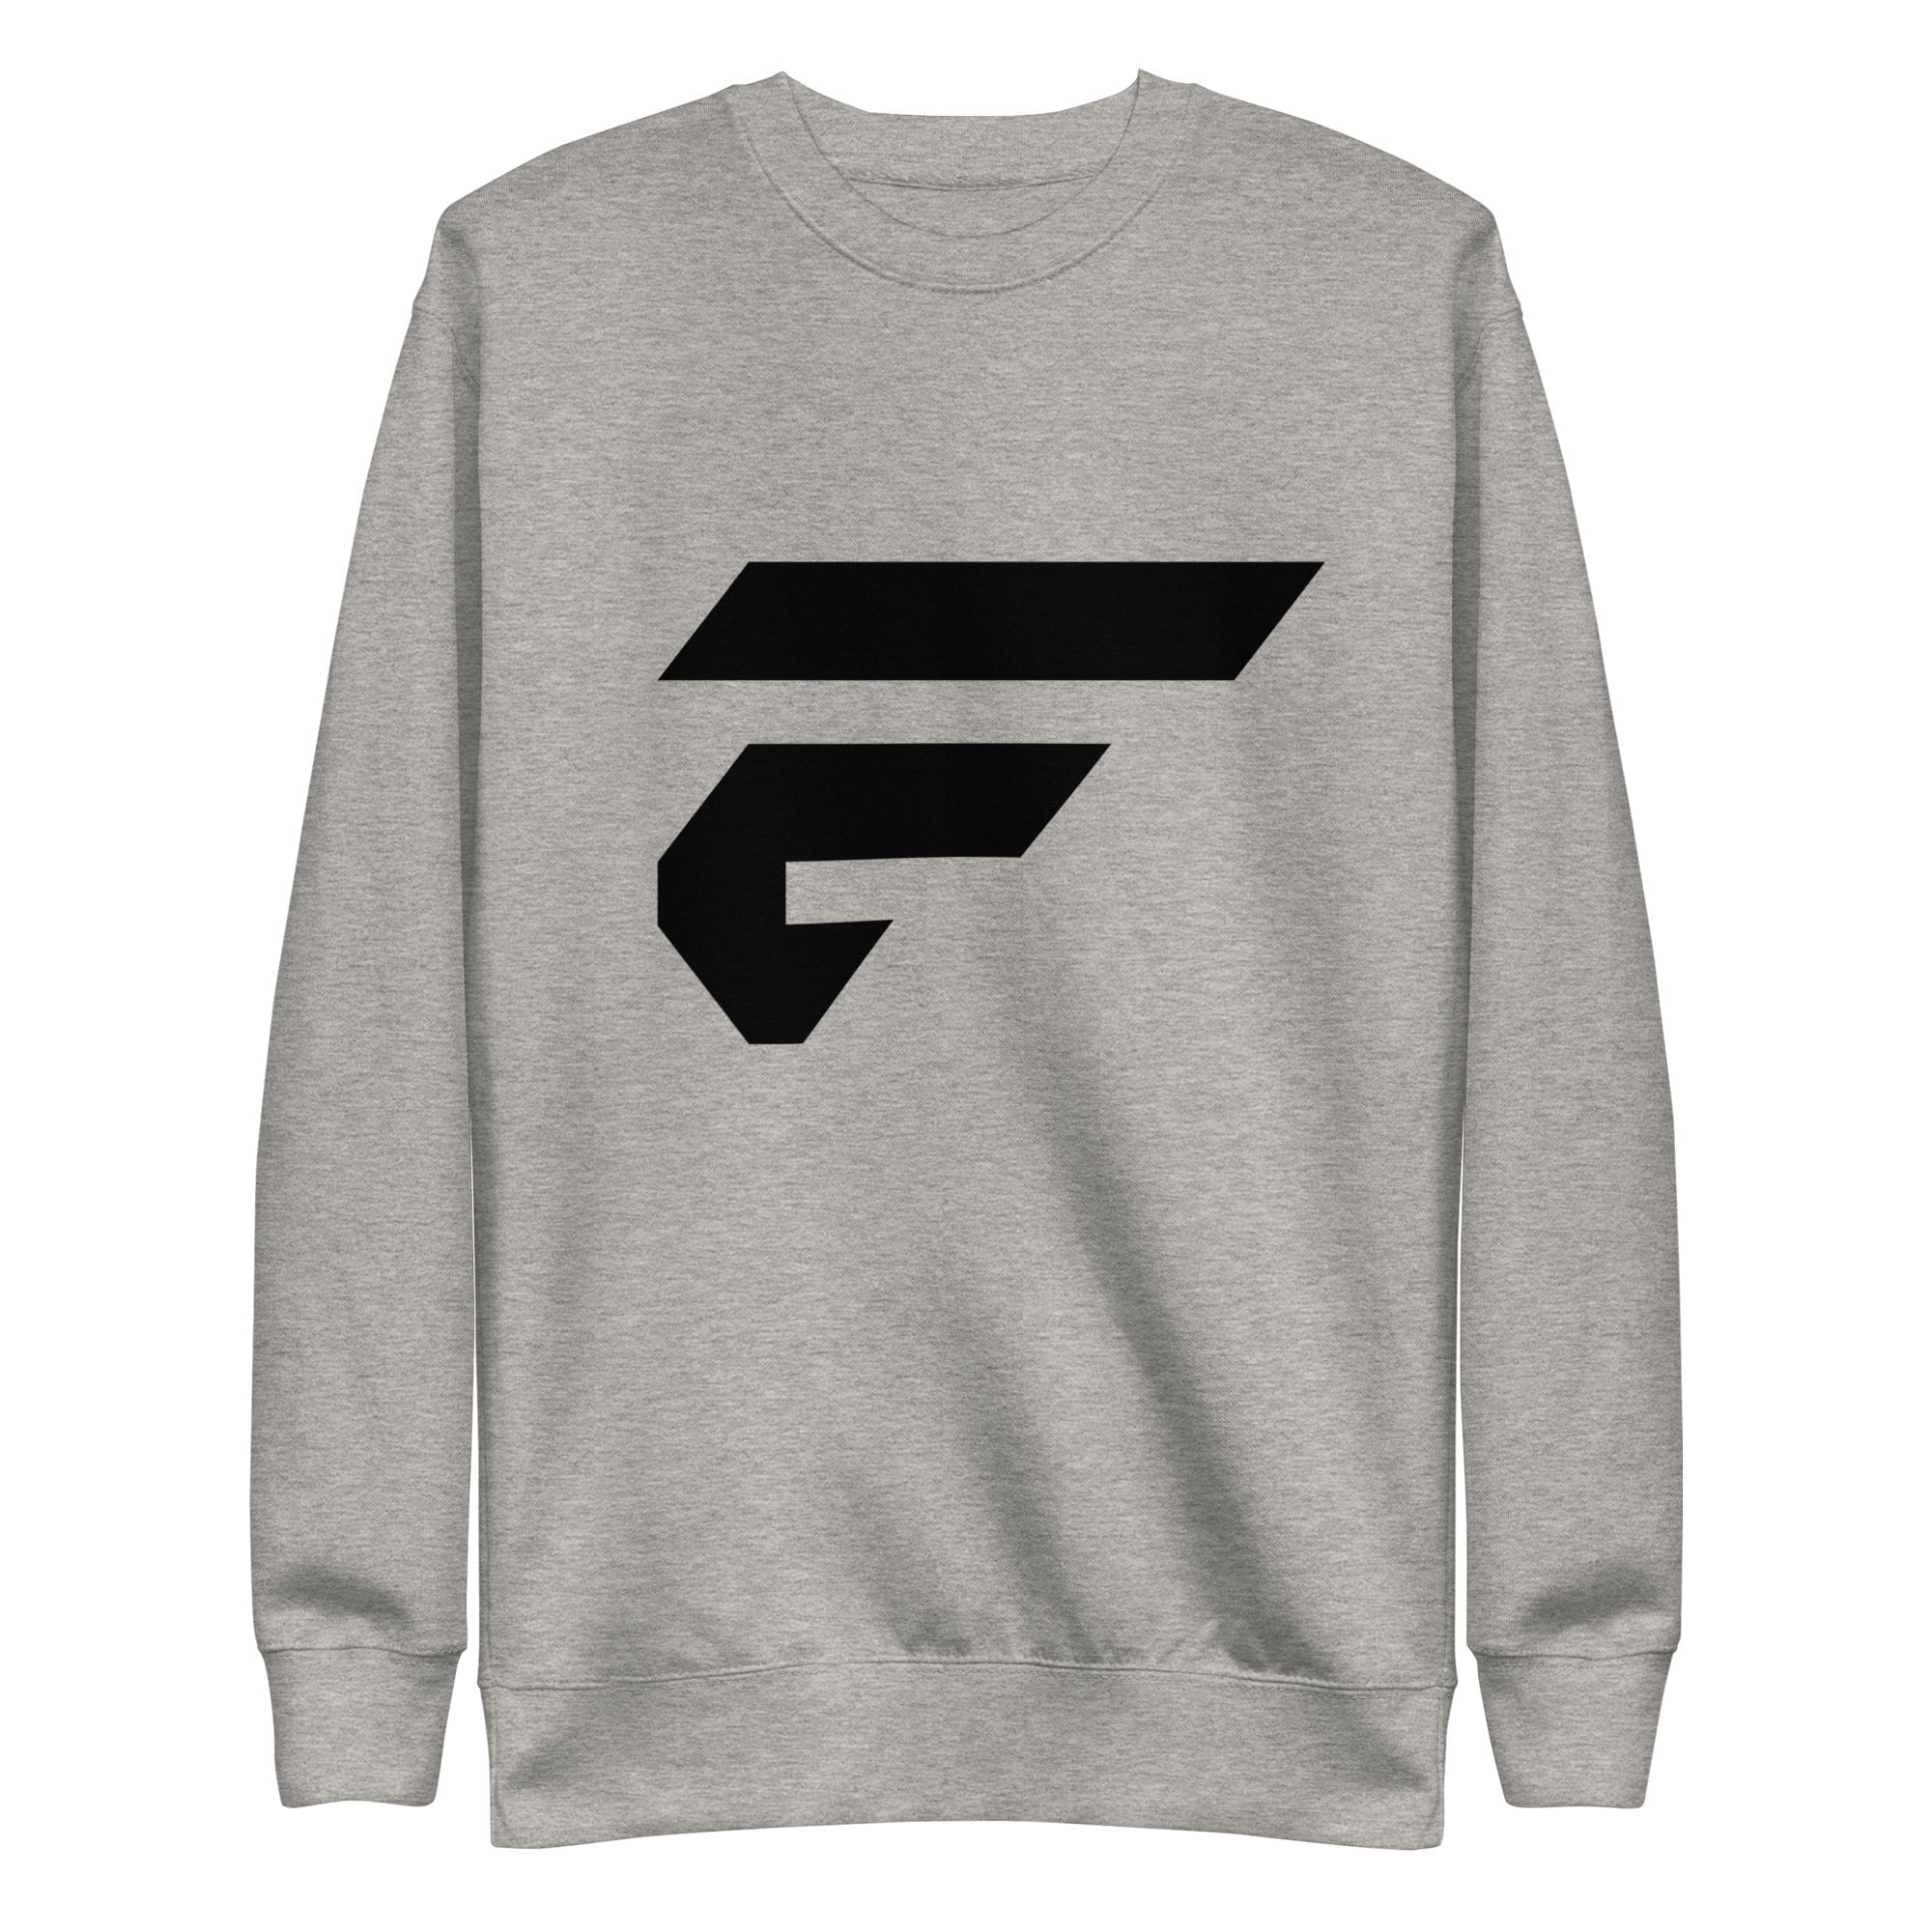 Heathered grey unisex sweatshirt with Fire Cornhole F logo in black